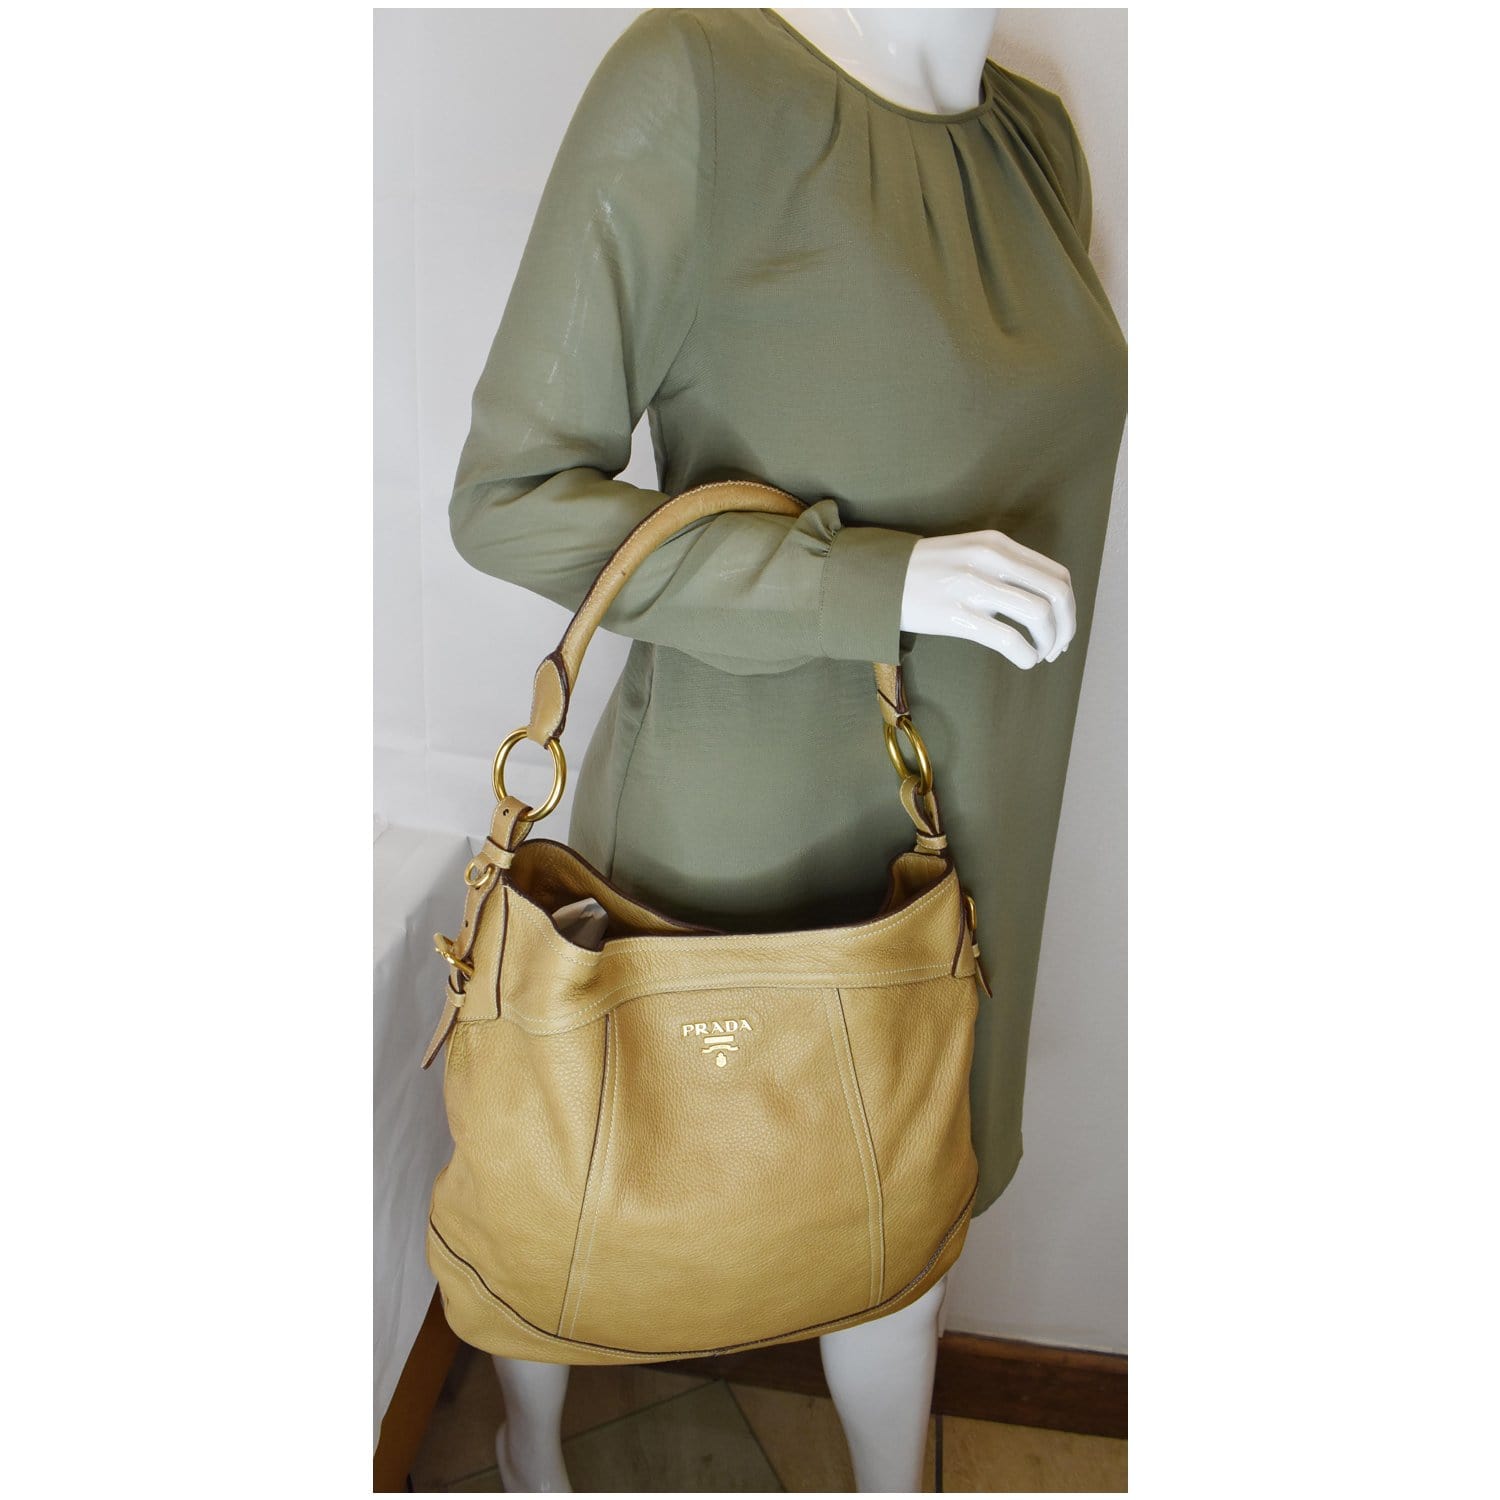 Prada Hobo Bag (BR4712), Ottanio Green Color, Vit.Daino Leather